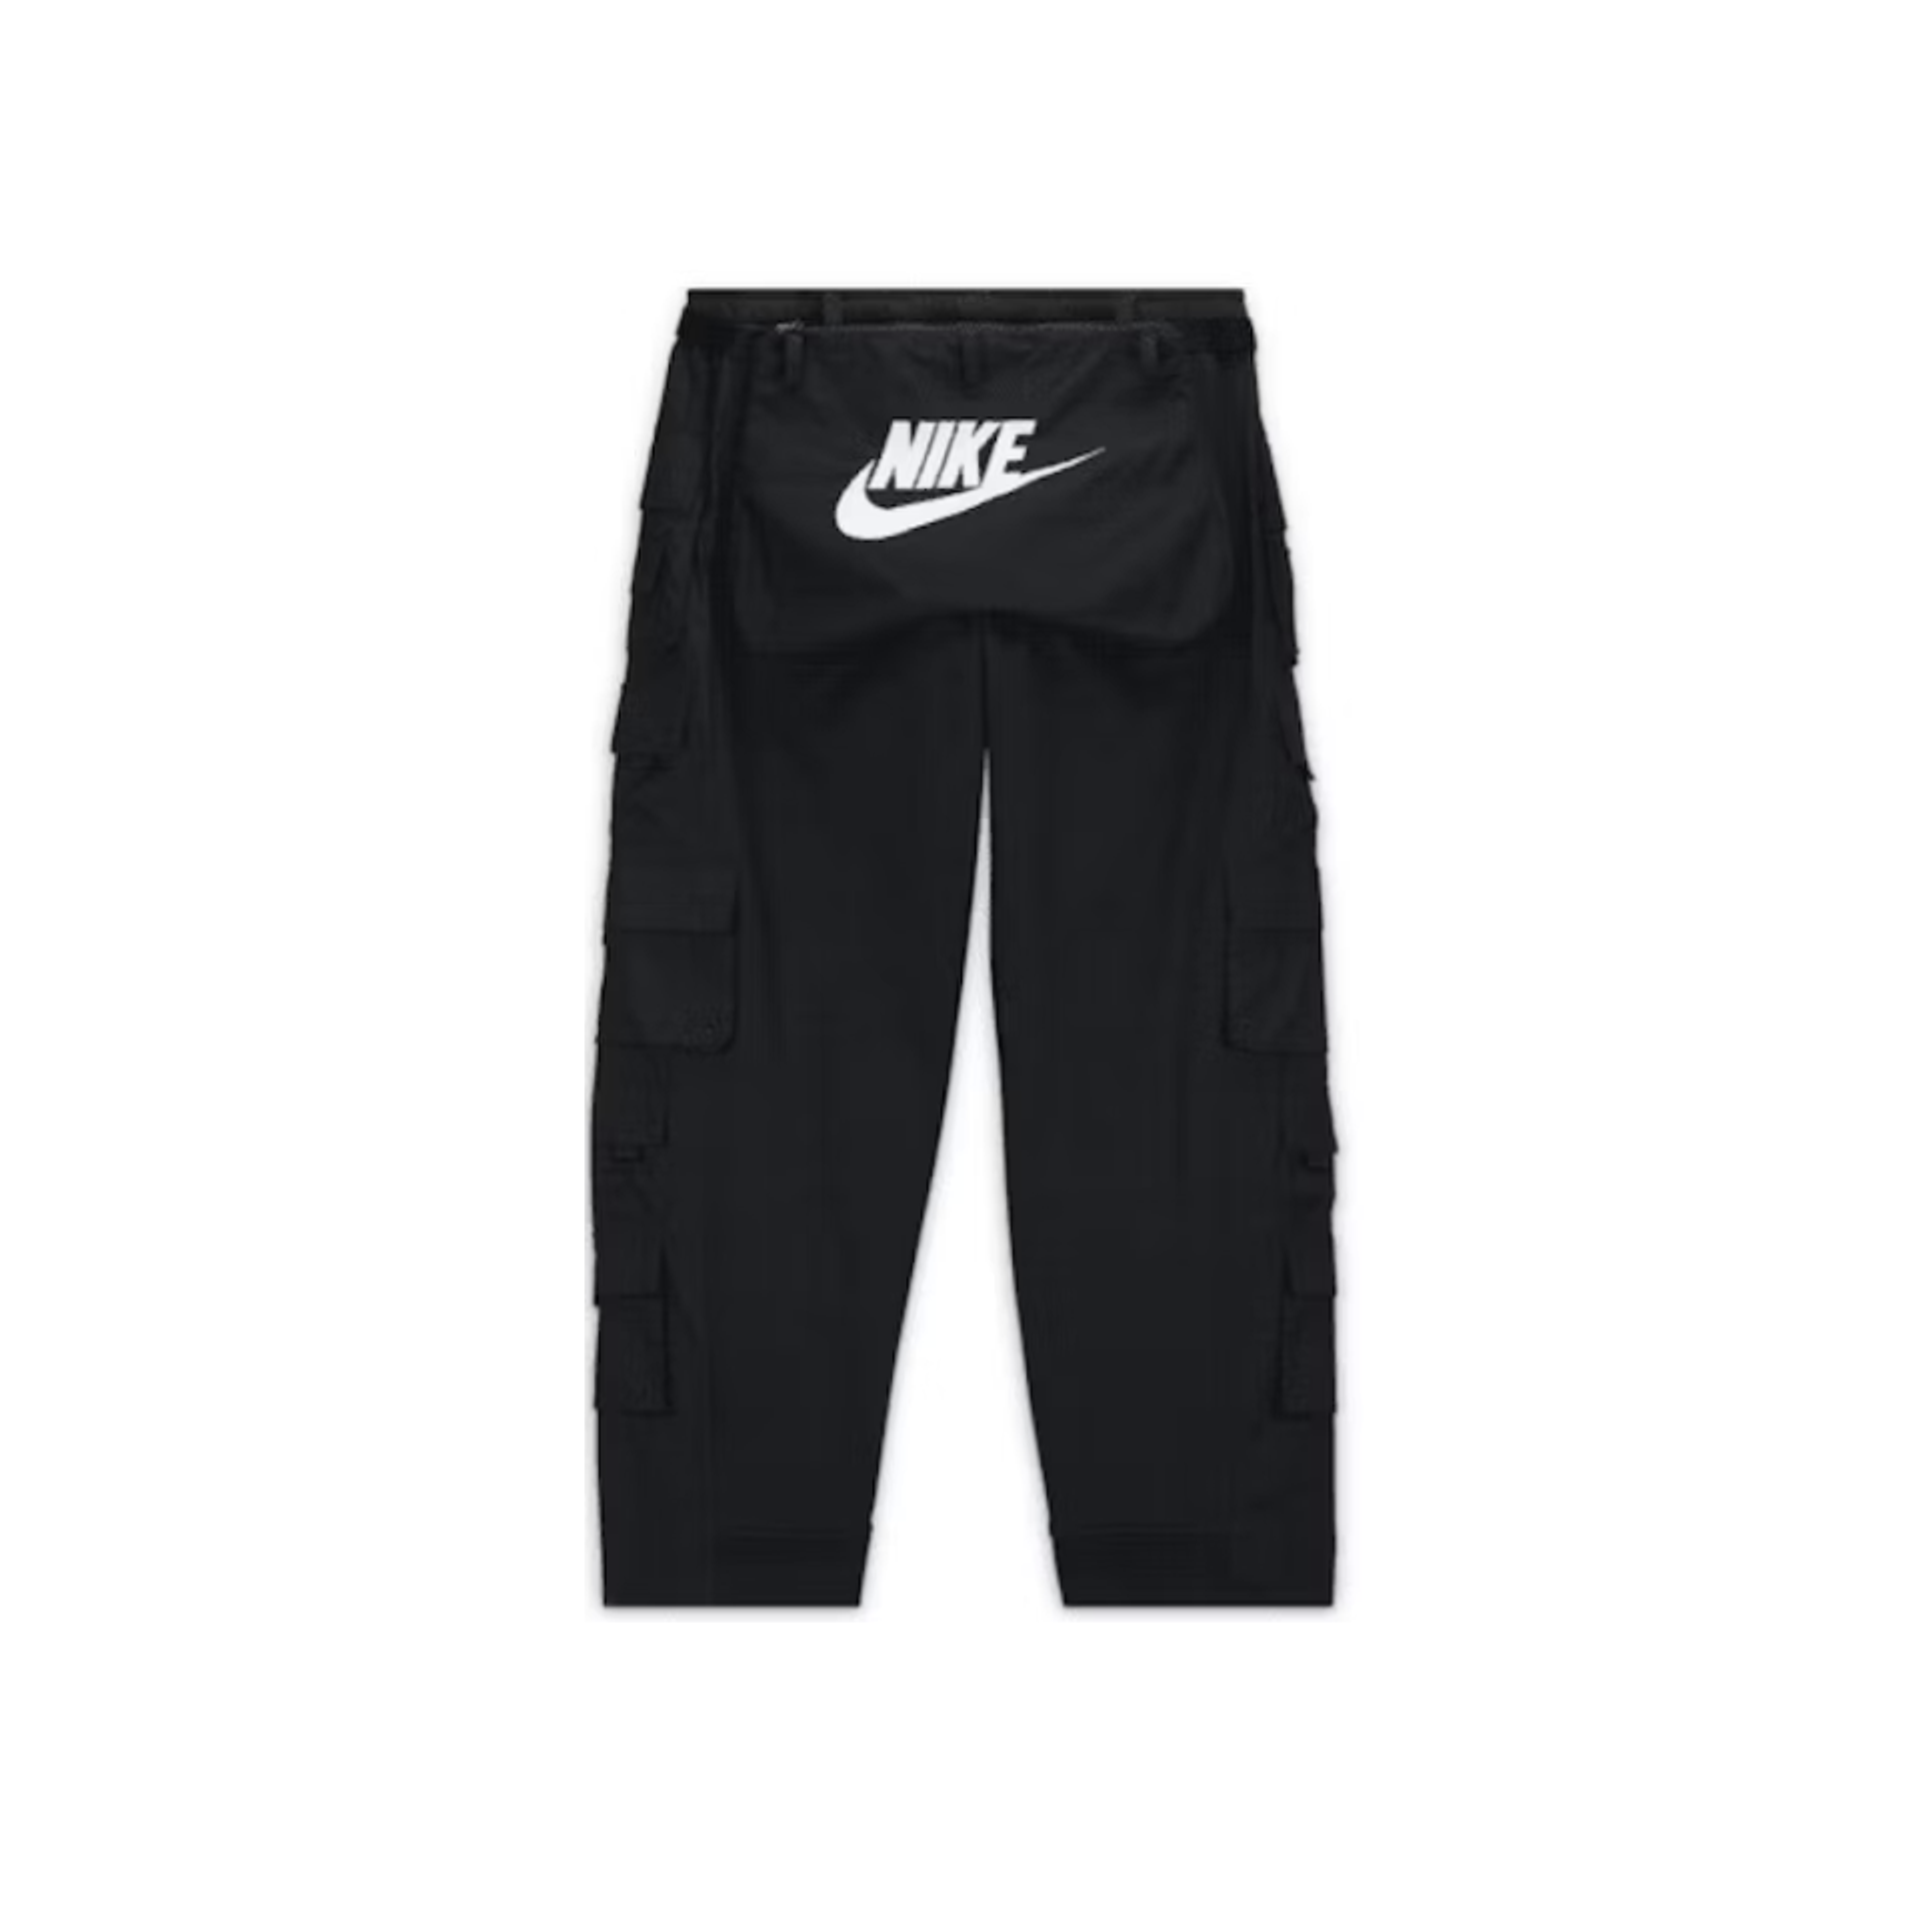 Nike x Peaceminusone G-Dragon Wide Pants (Asia Sizing)